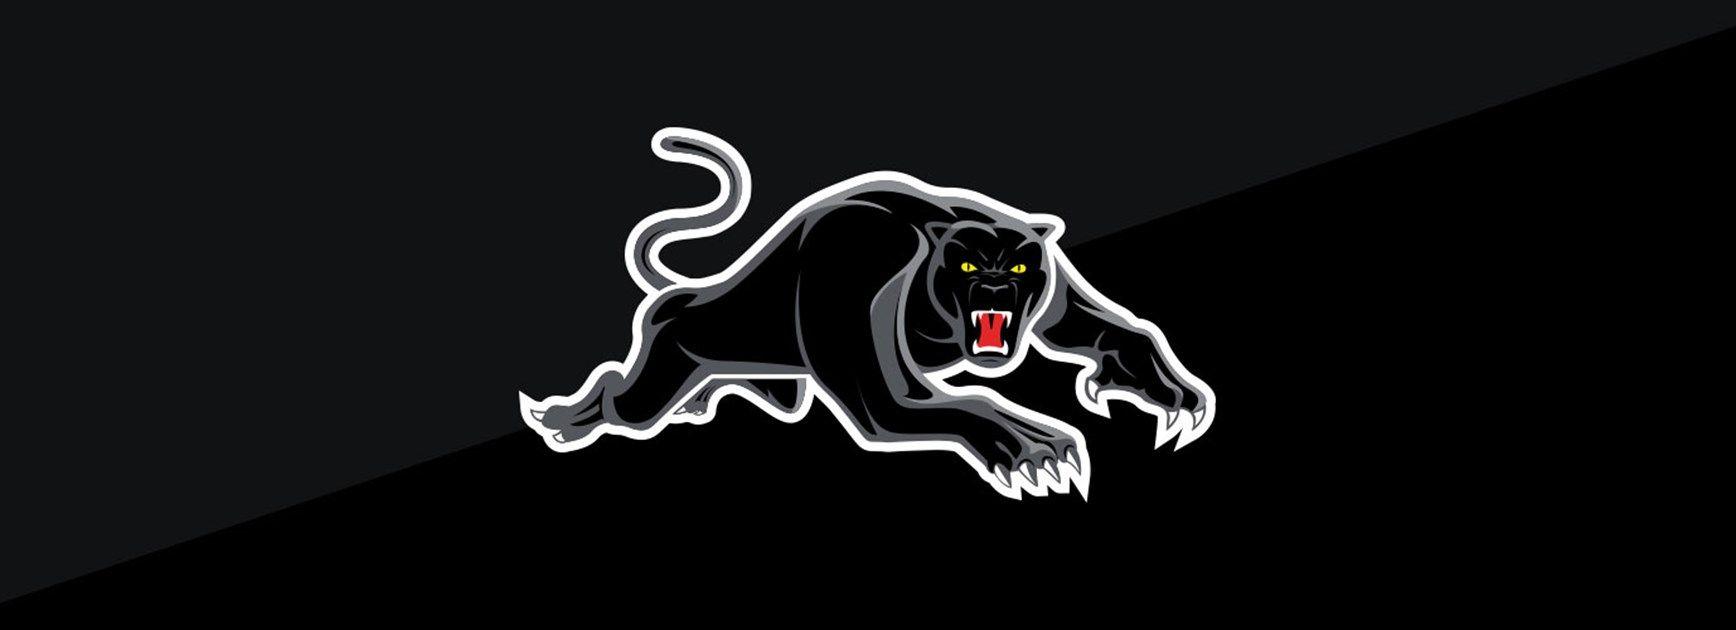 Panthers Logo - Panthers reveals renewed logos for 2019 - Panthers